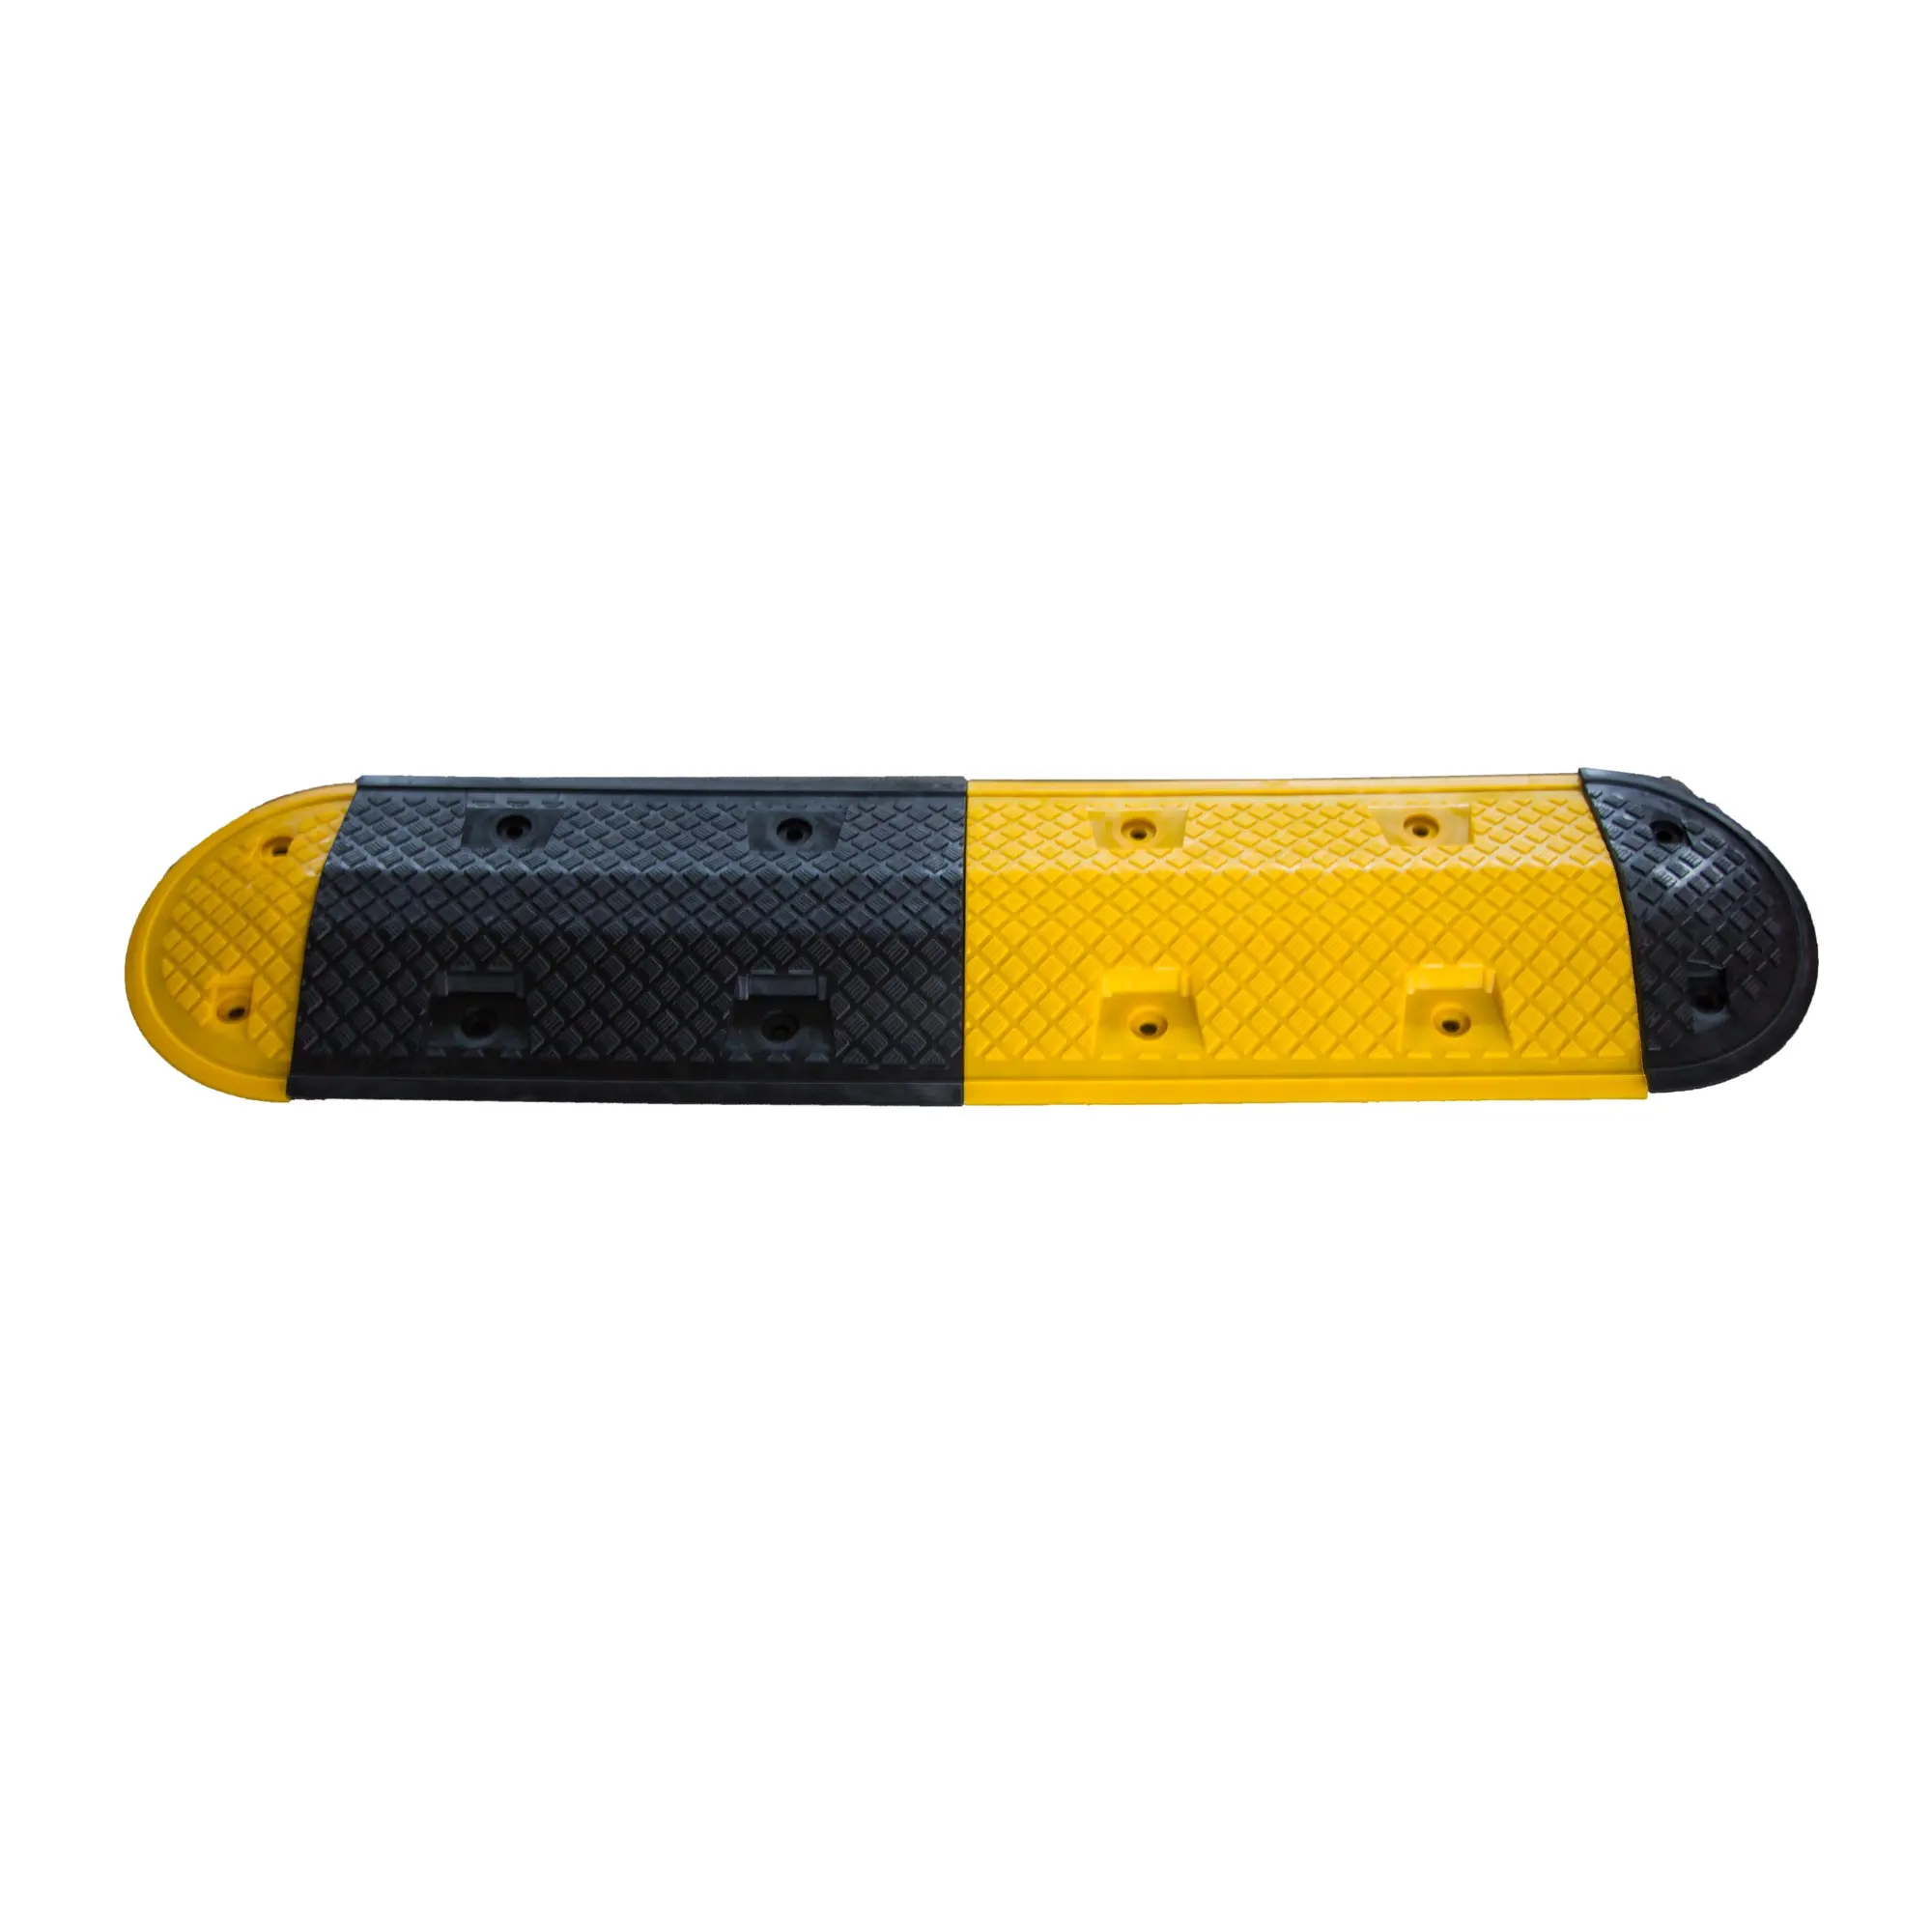 Outdoor Rubber Plastic Spiral Floor Portable Road Portable Installation Speed Breaker Bump